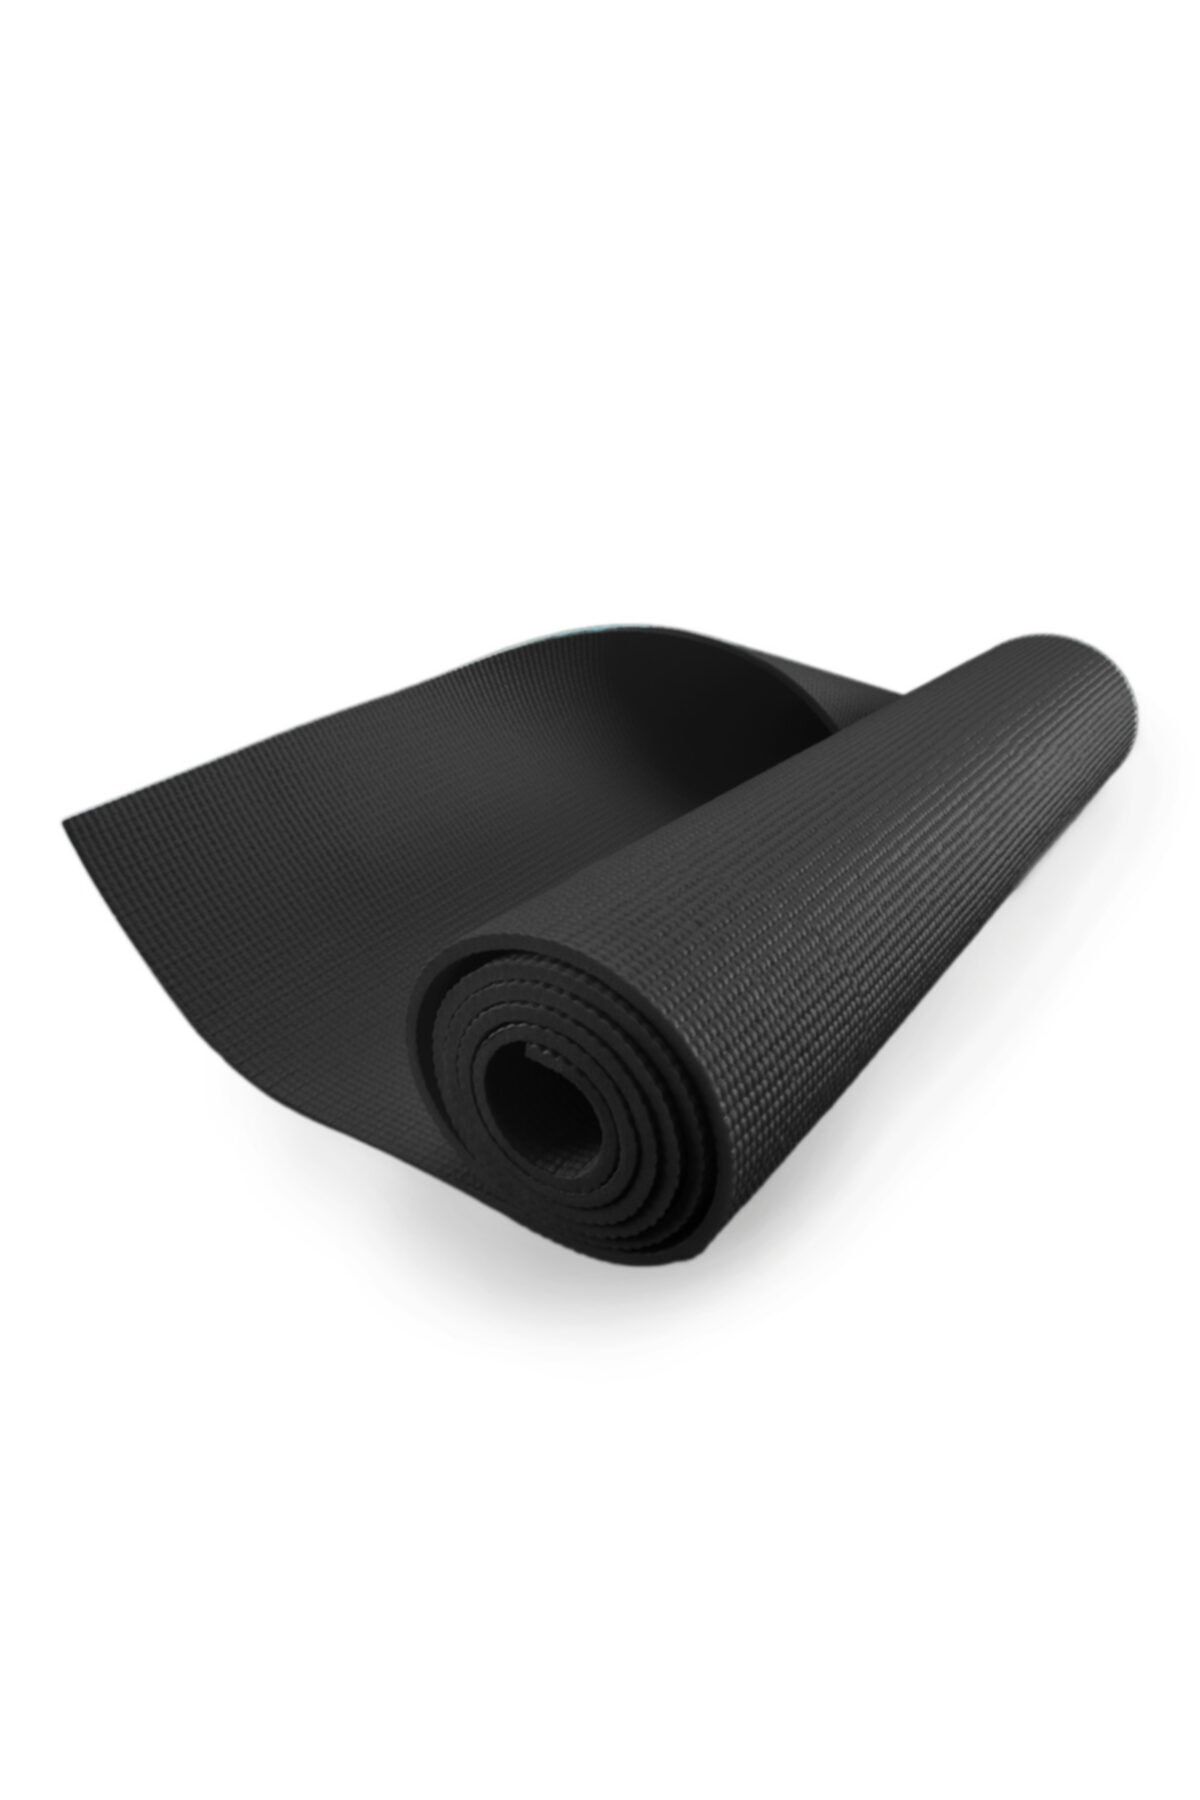 Ziva Fitness Zıva Deluxe Foam Yoga Minderi 6mm